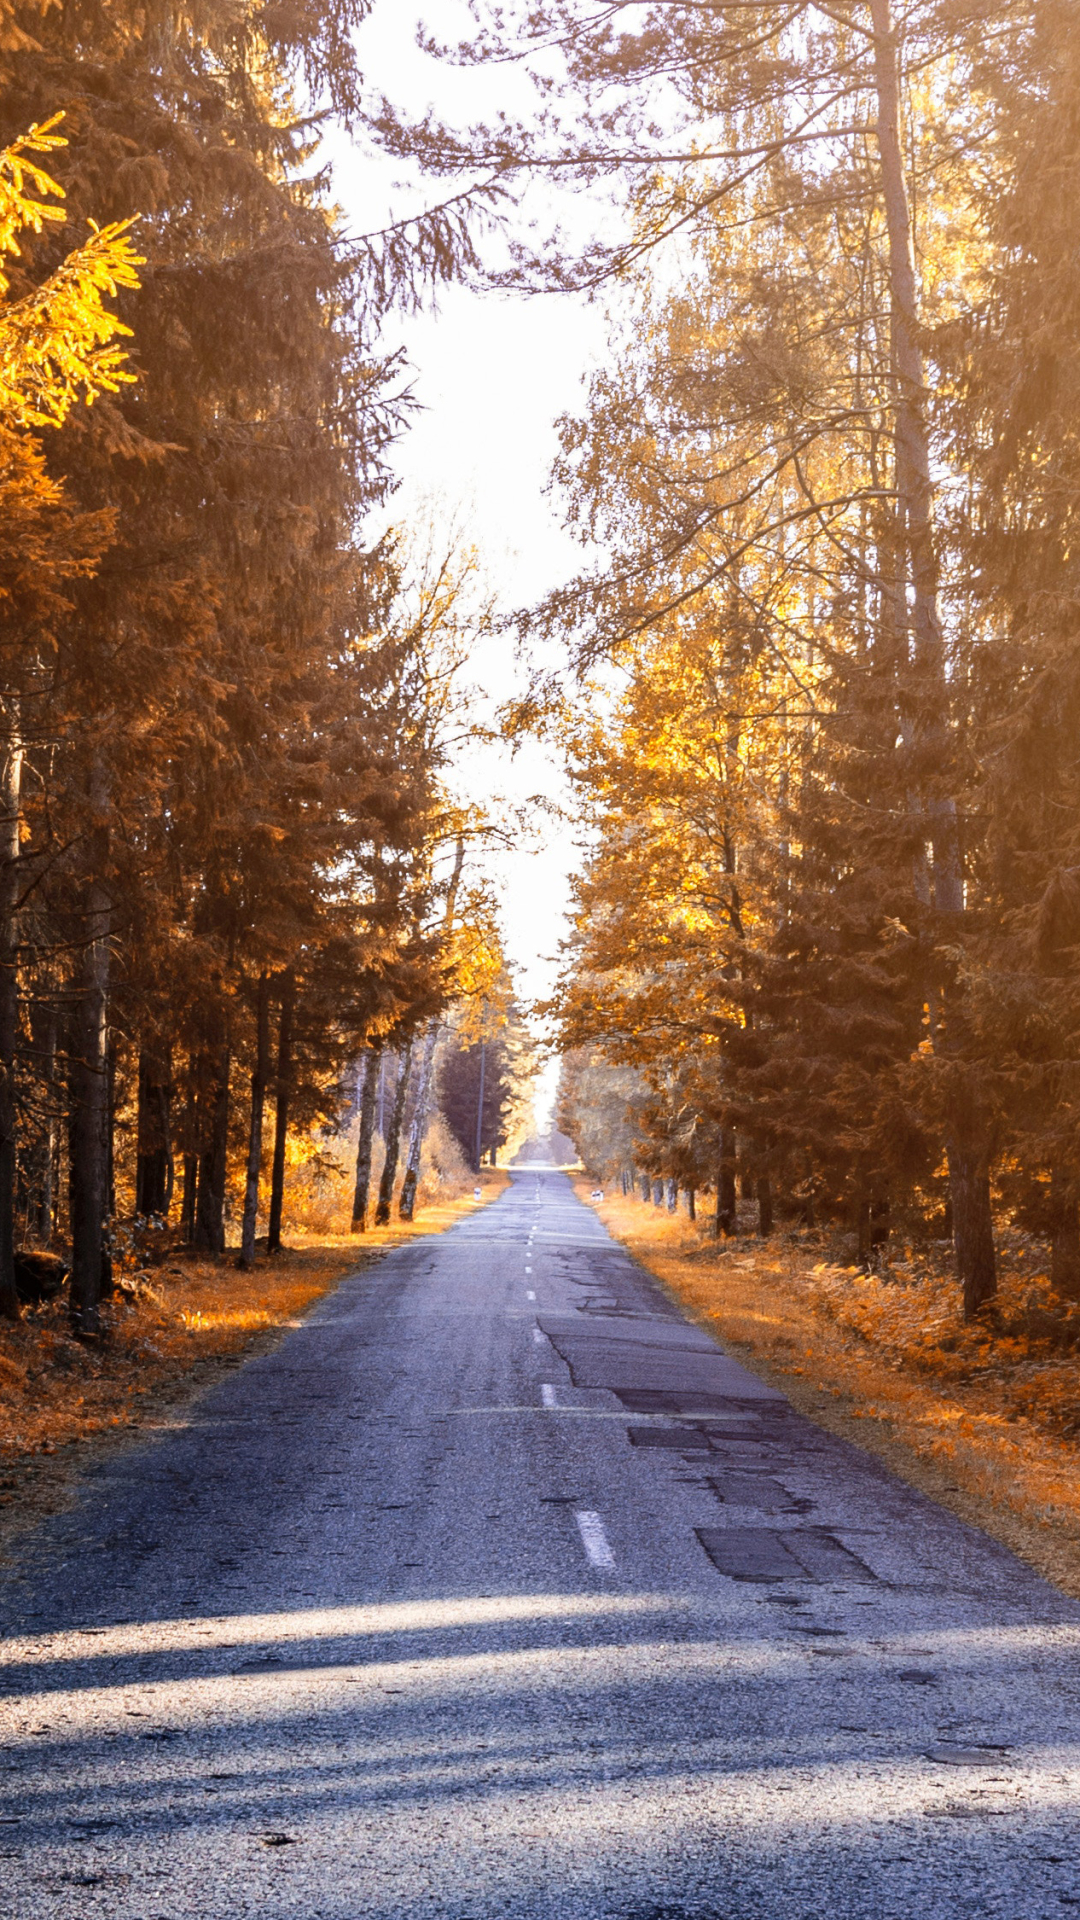 Autumn Road by Artem Saranin